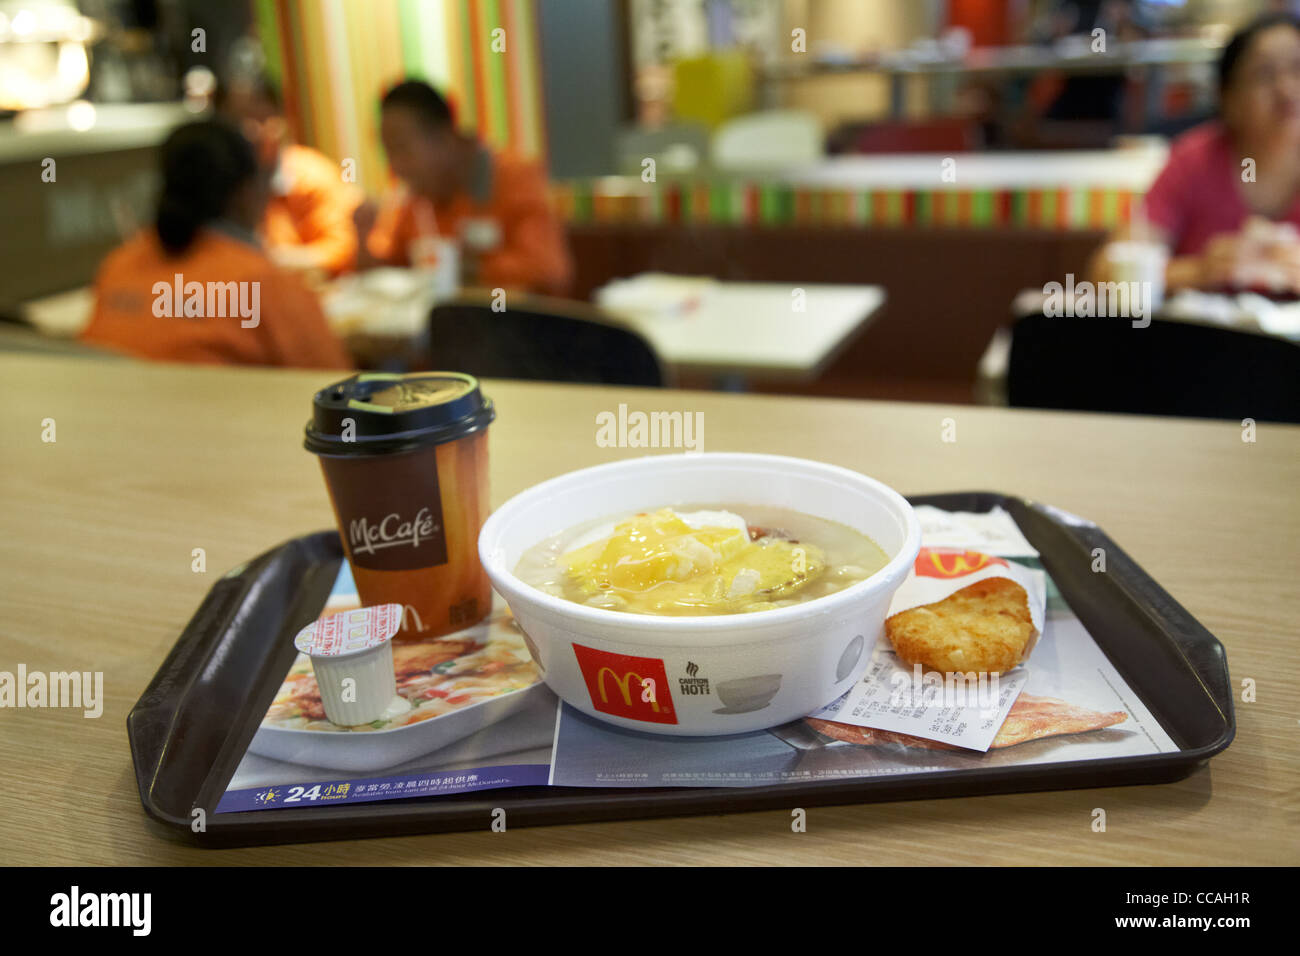 McDonalds Hong Kong asiatischen Wurst n kurvenreichen Eiernudeln Frühstück Sonderverwaltungsregion Hongkong China Asien Stockfoto